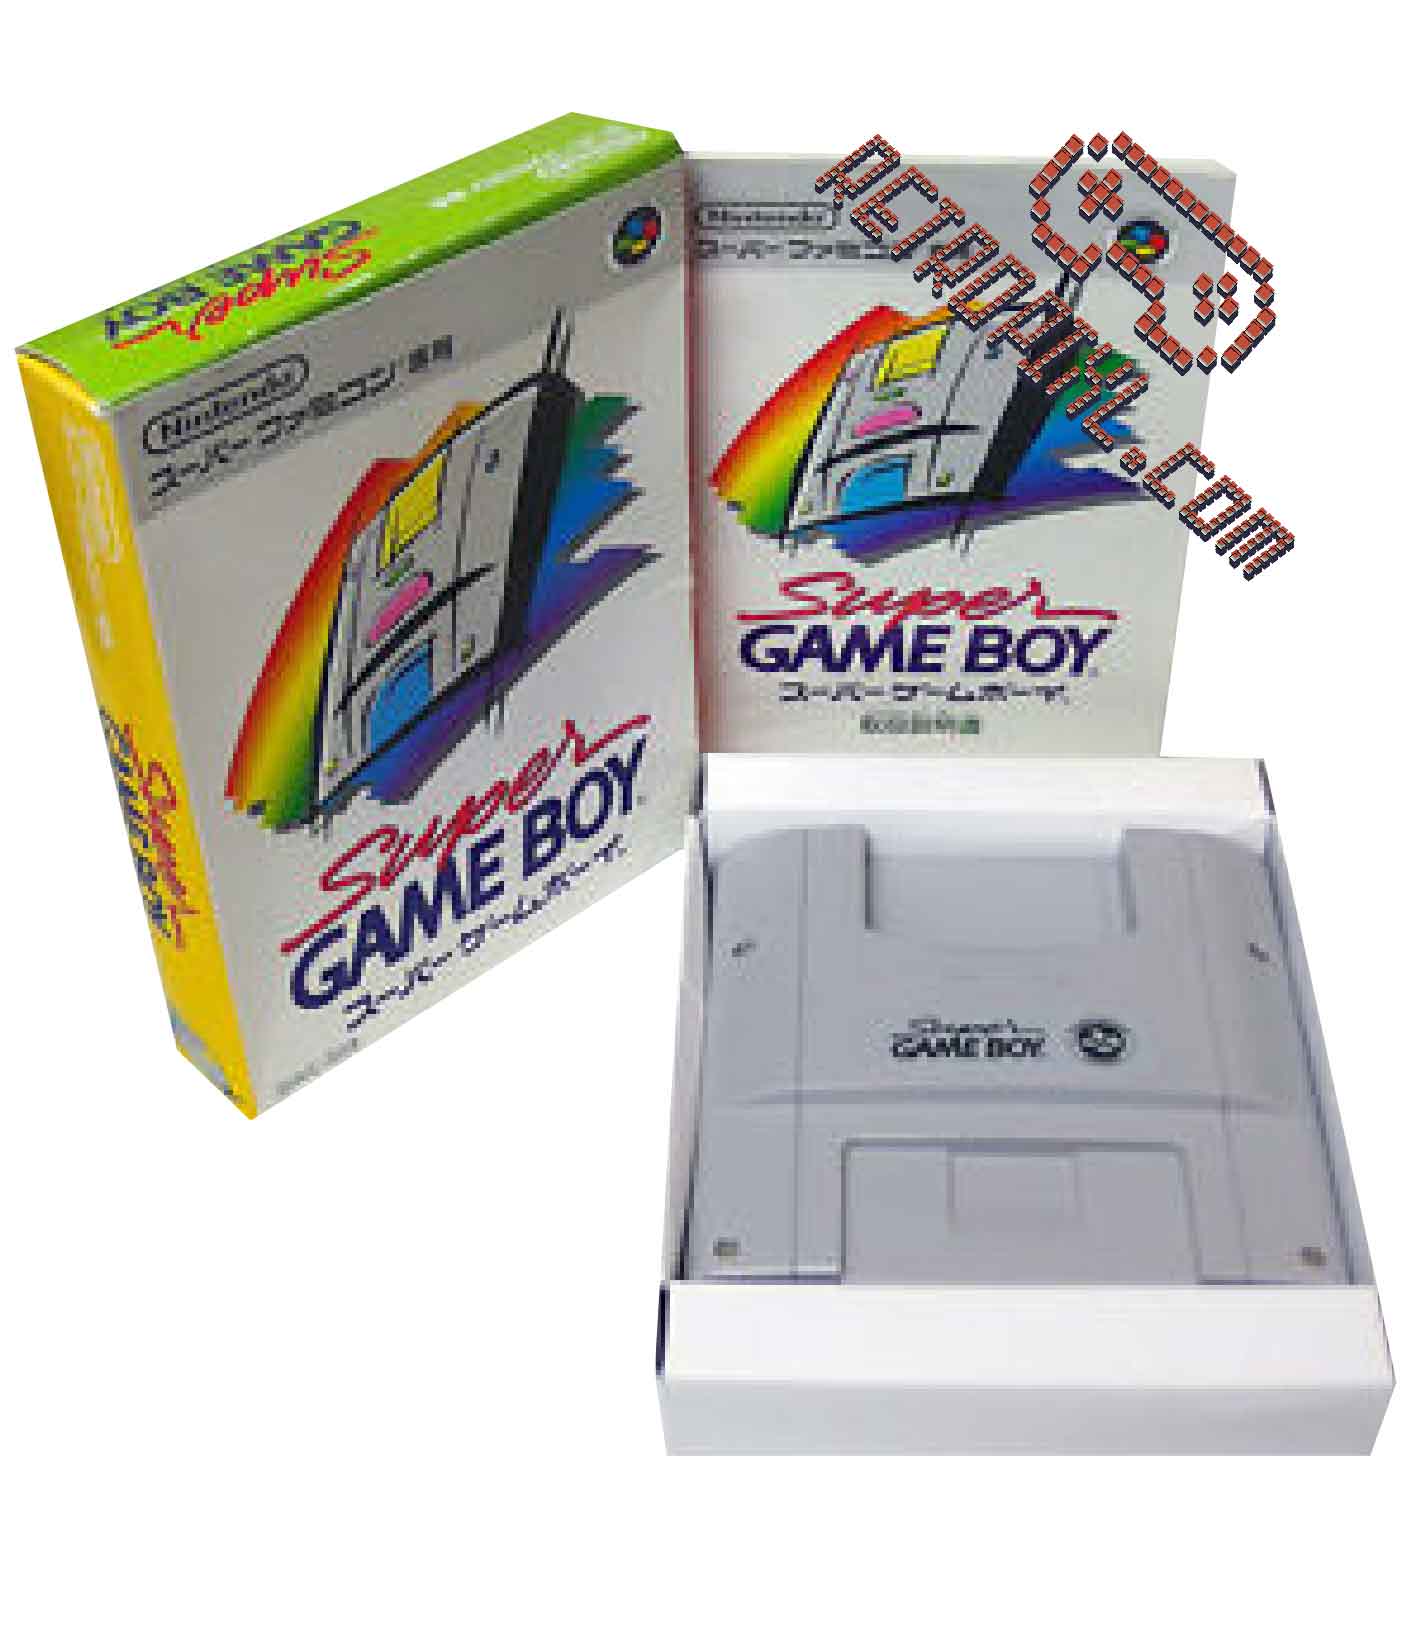 Nintendo Super Game Boy – RetroPixl